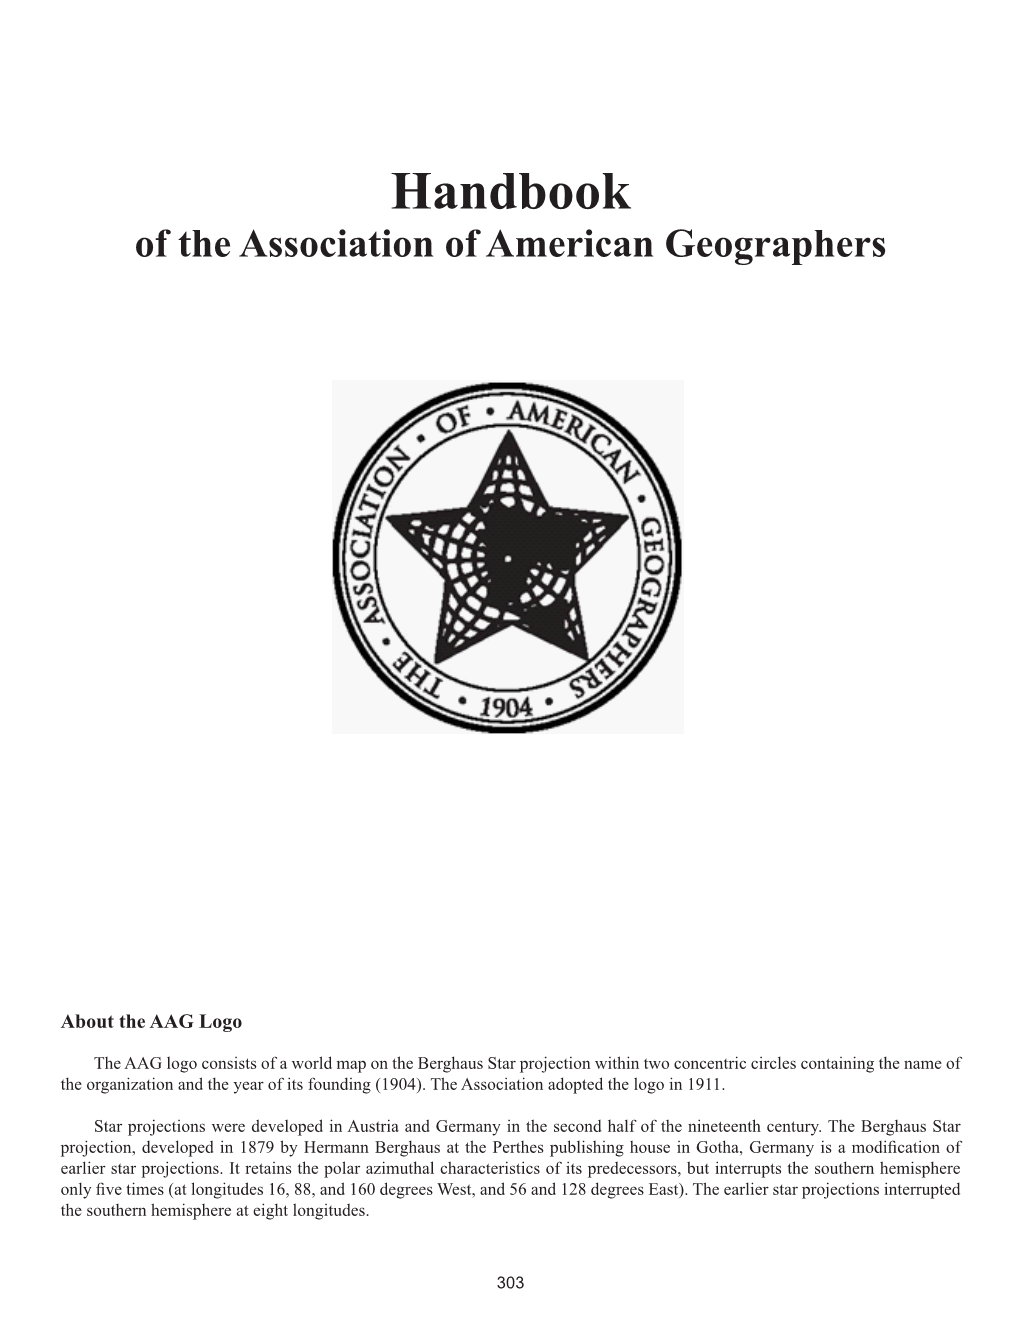 Handbook of the Association of American Geographers